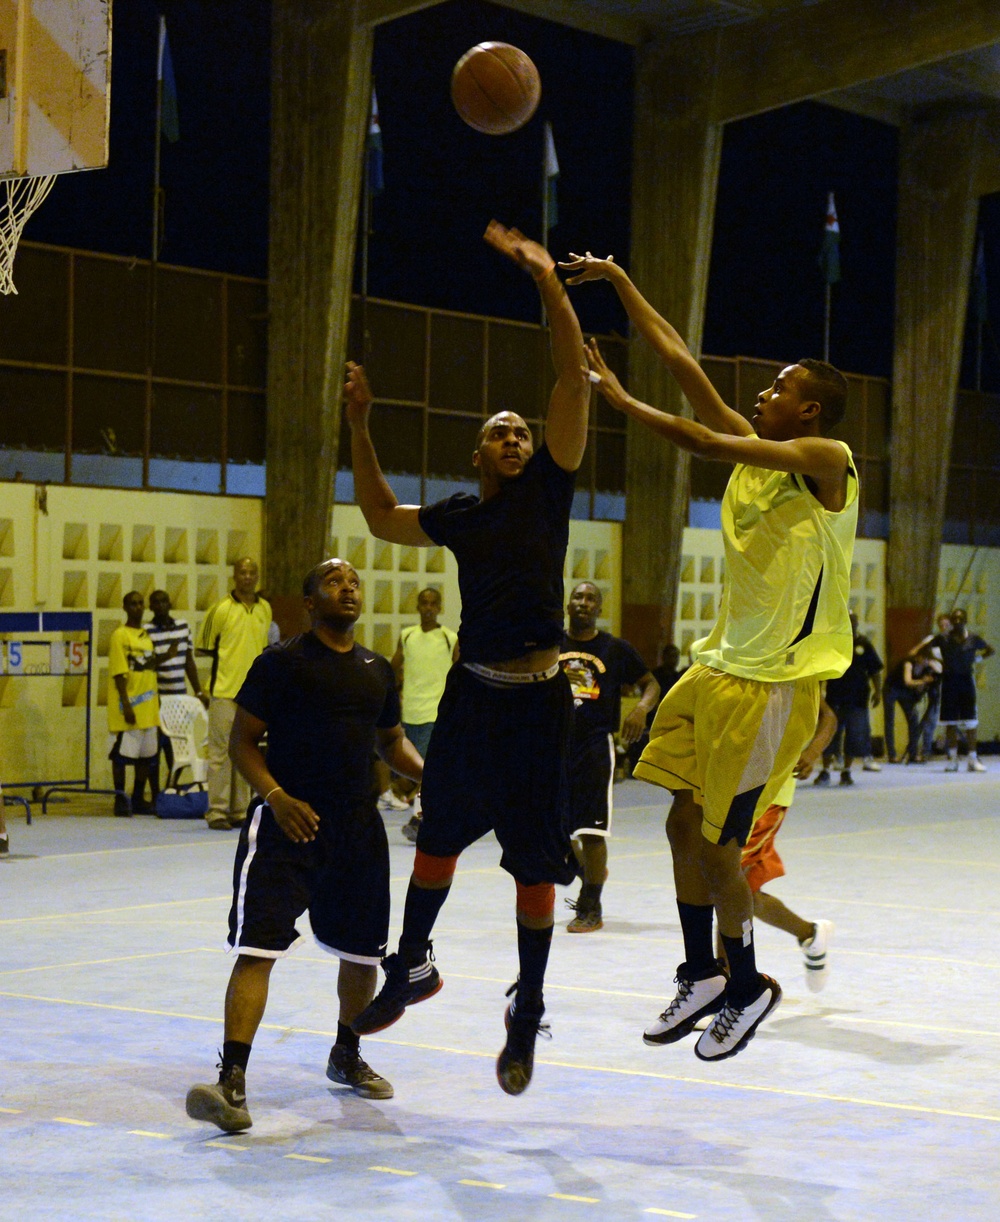 American-Djiboutian basketball game